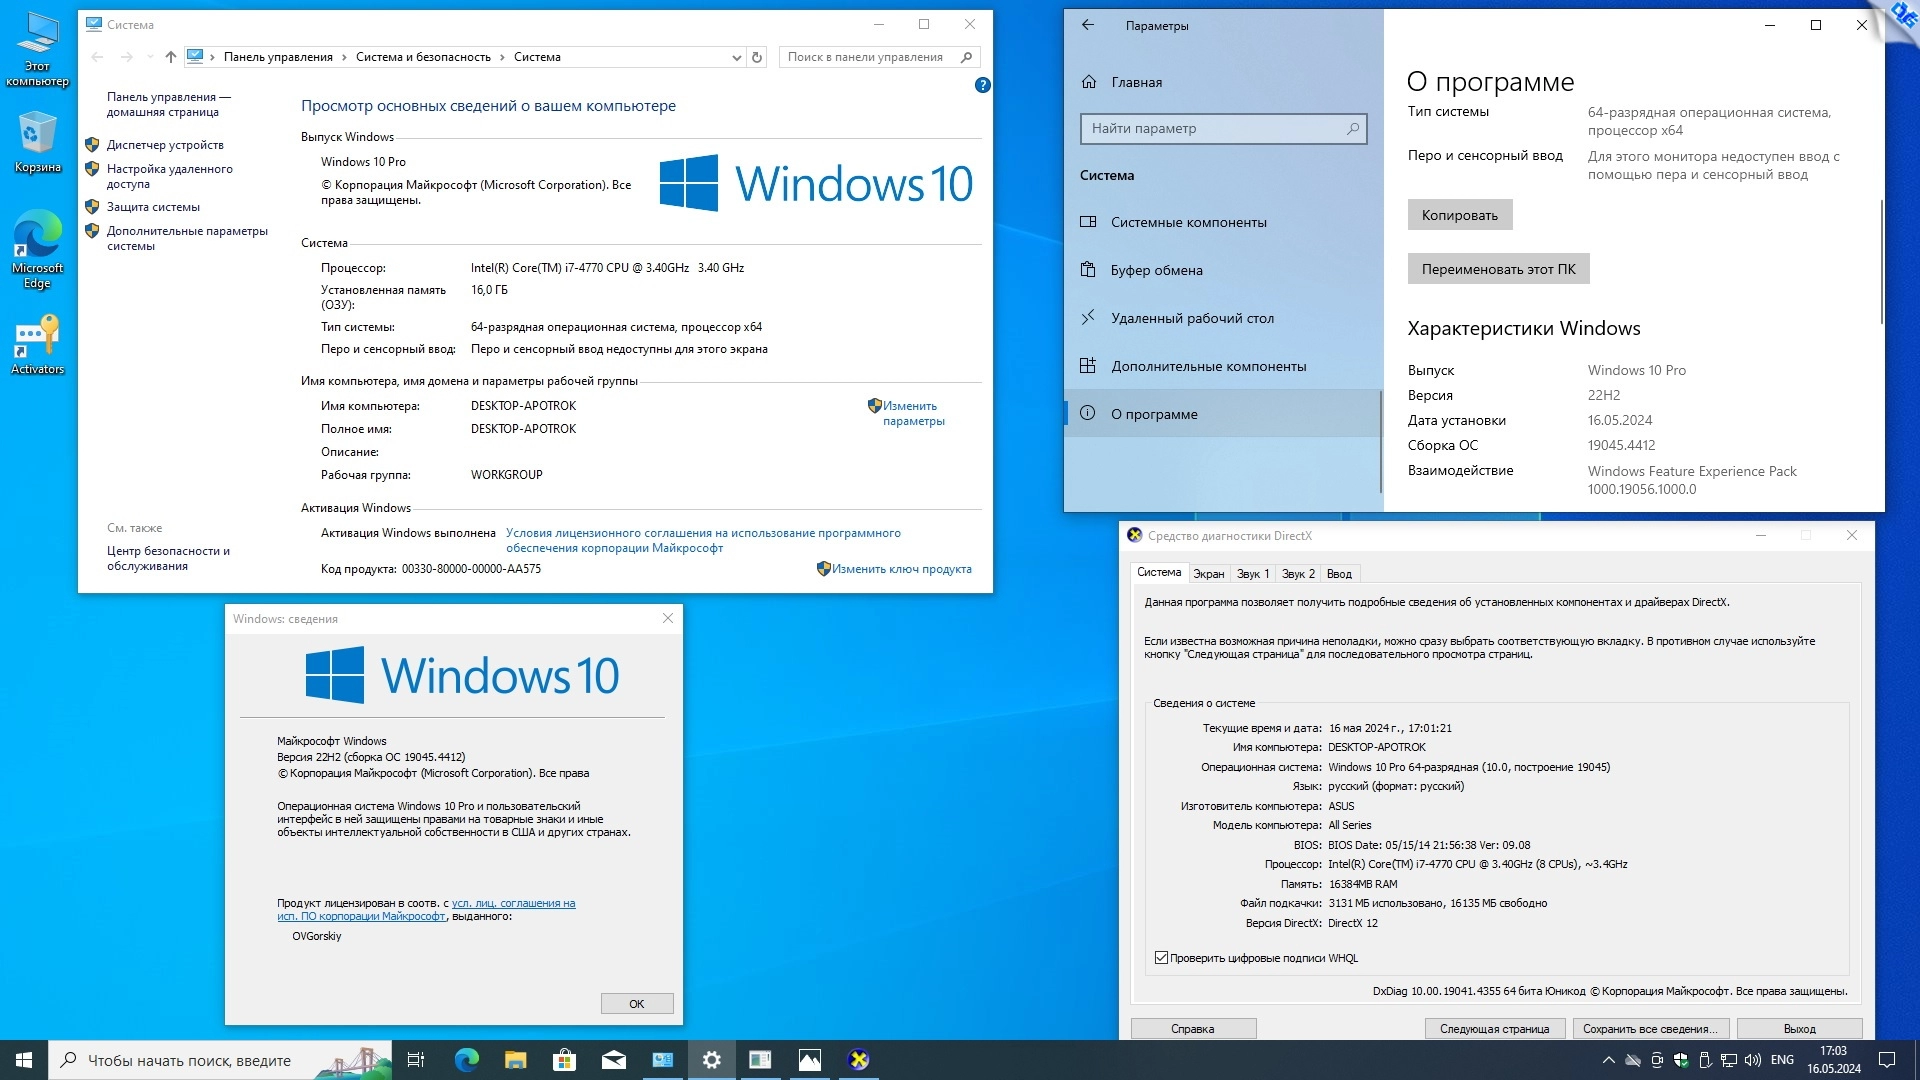 Windows 10 x64 Ru 22H2 19045.4412 Upd 05.2024 by OVGorskiy